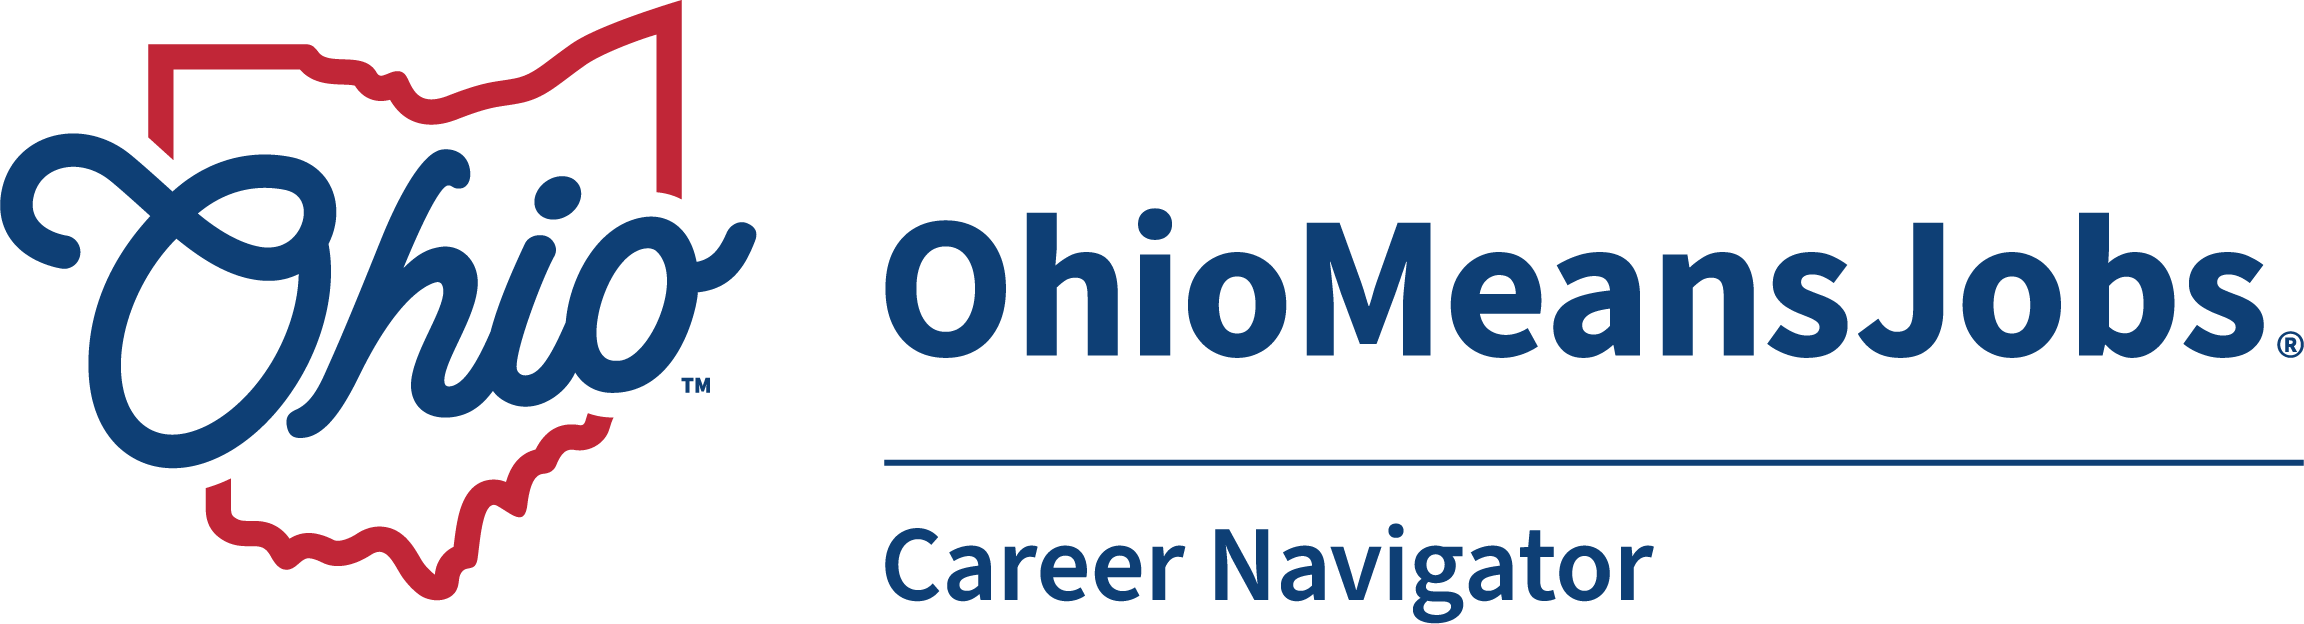 Ohio Career Navigator